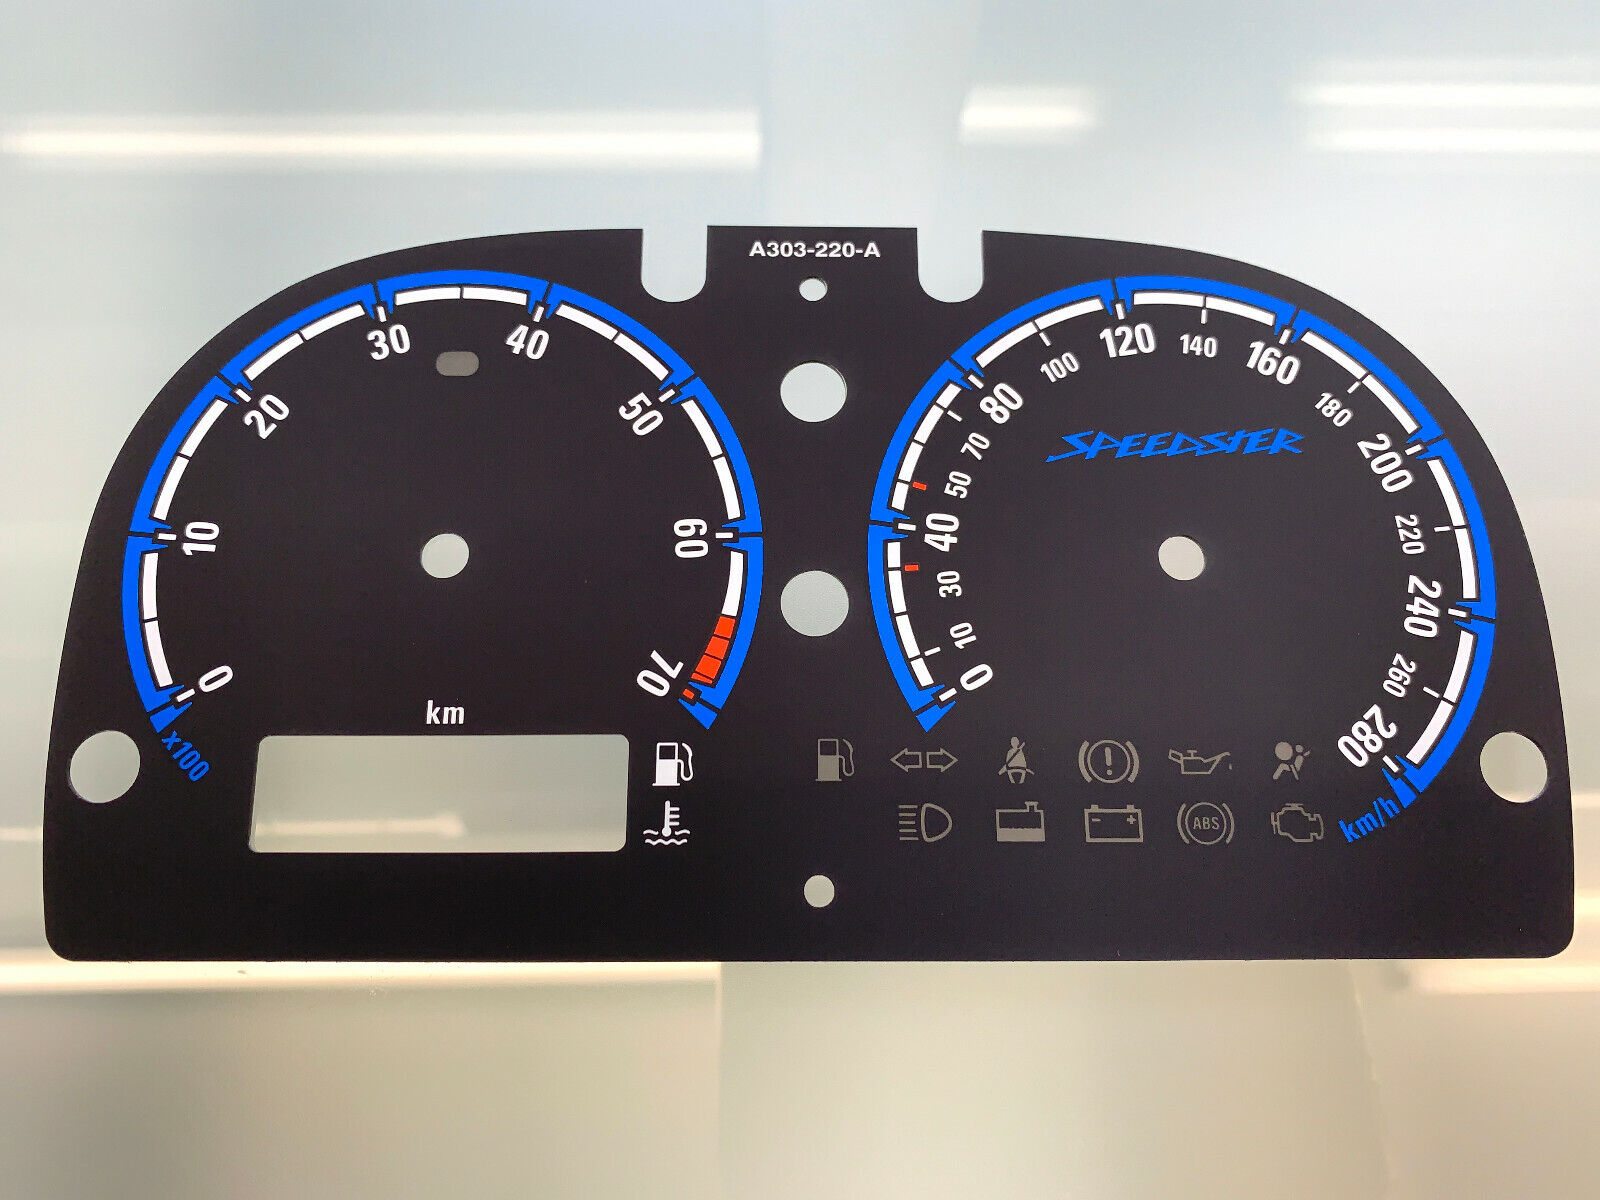 Opel Speedster plasma dials